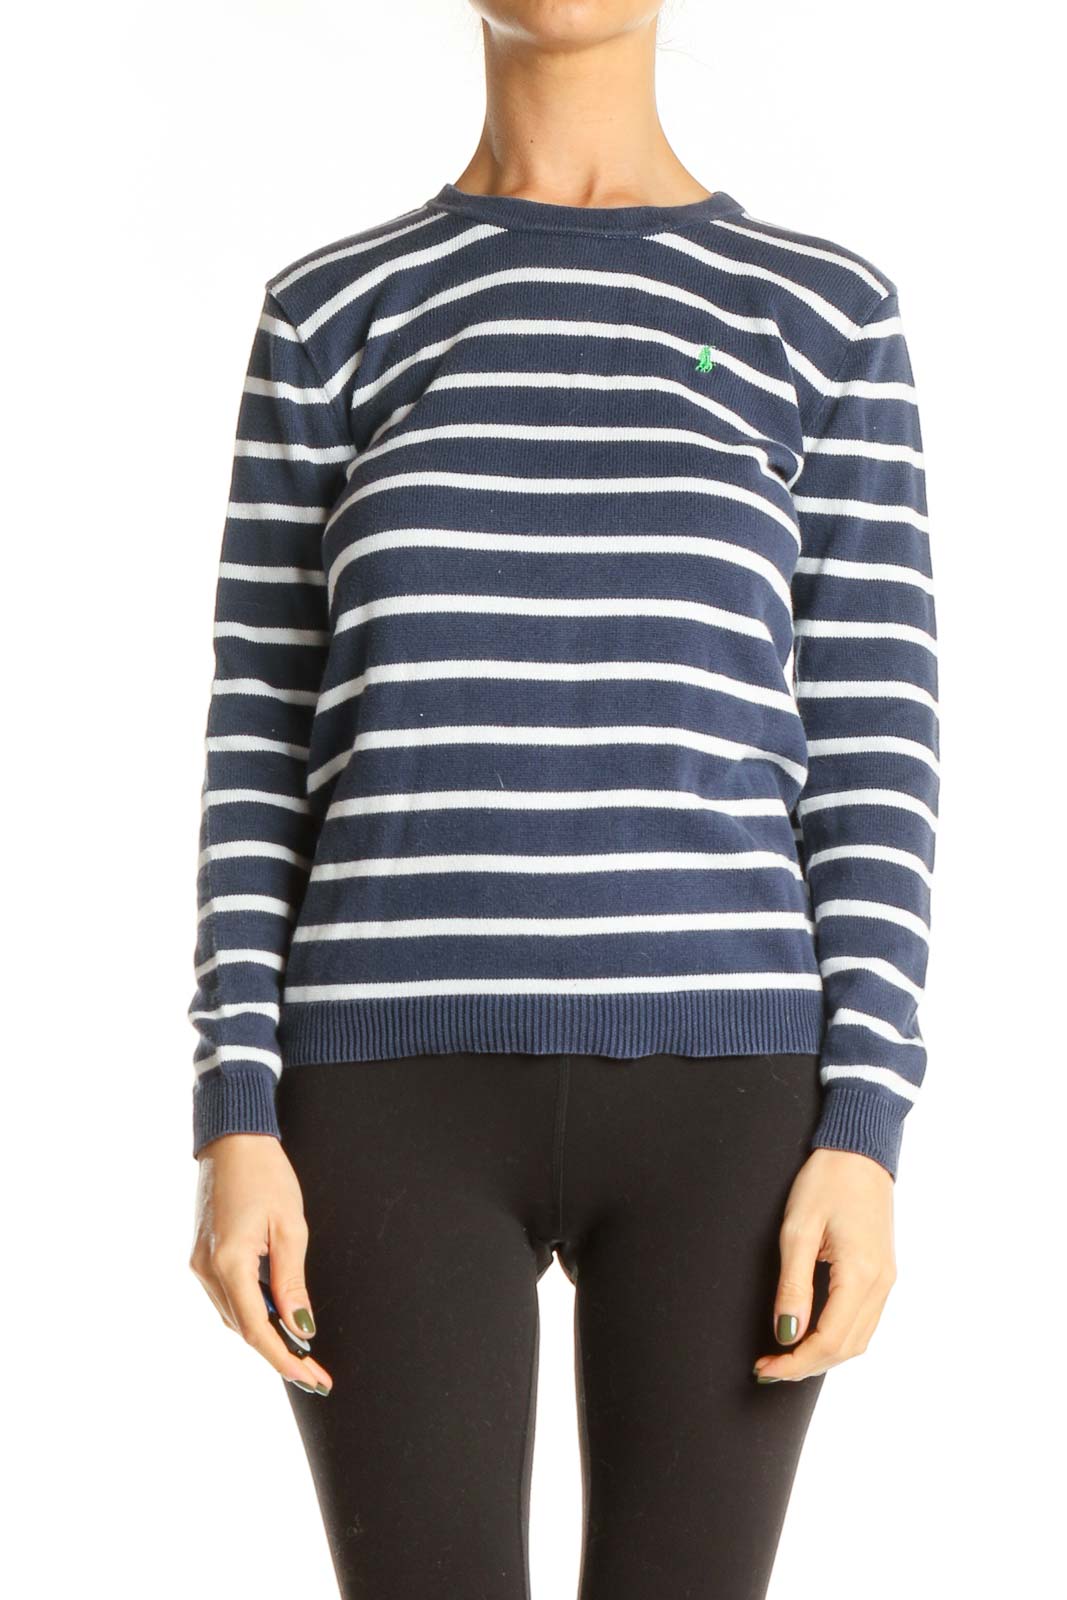 Blue Striped Retro Sweater Front